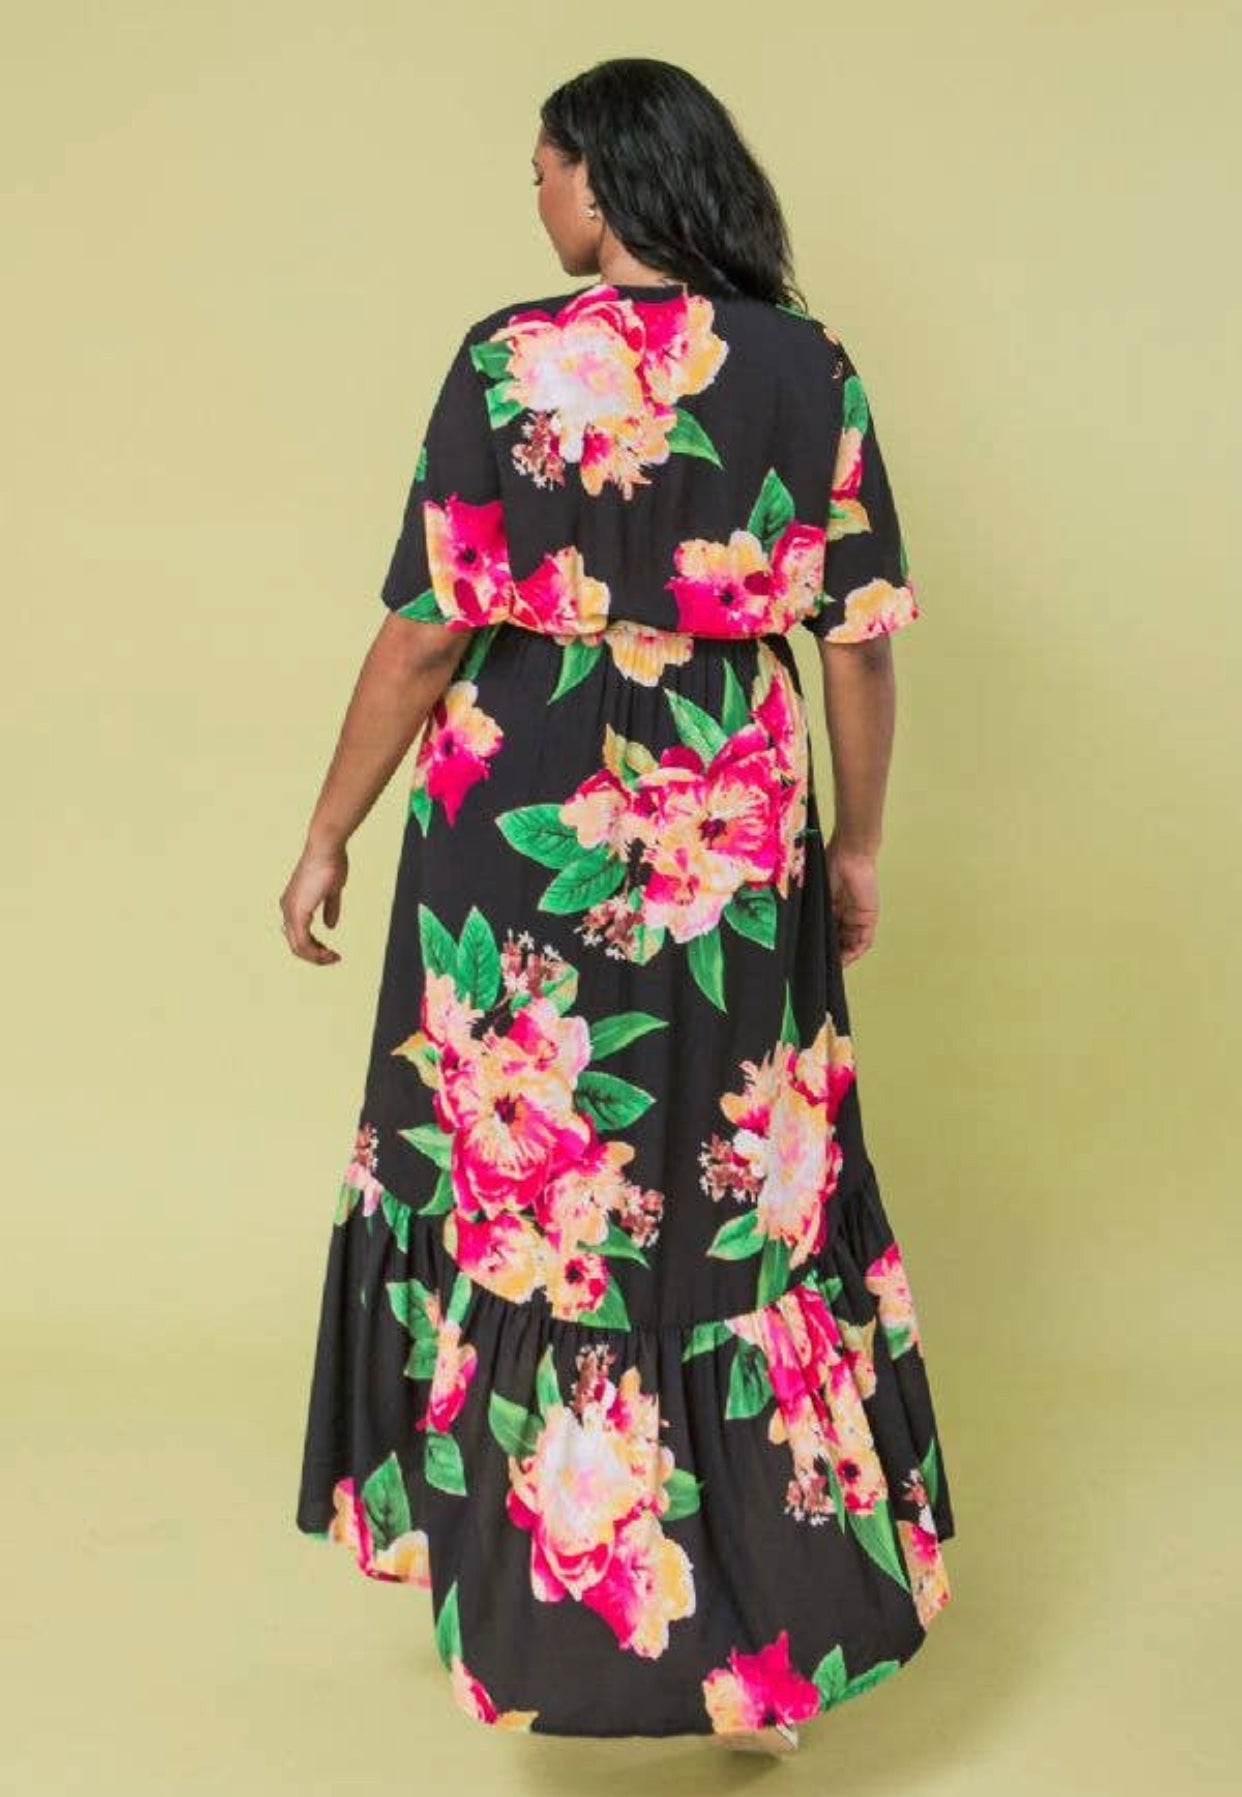 Floral Printed Maxi Dress, Sizes 1X - 3X